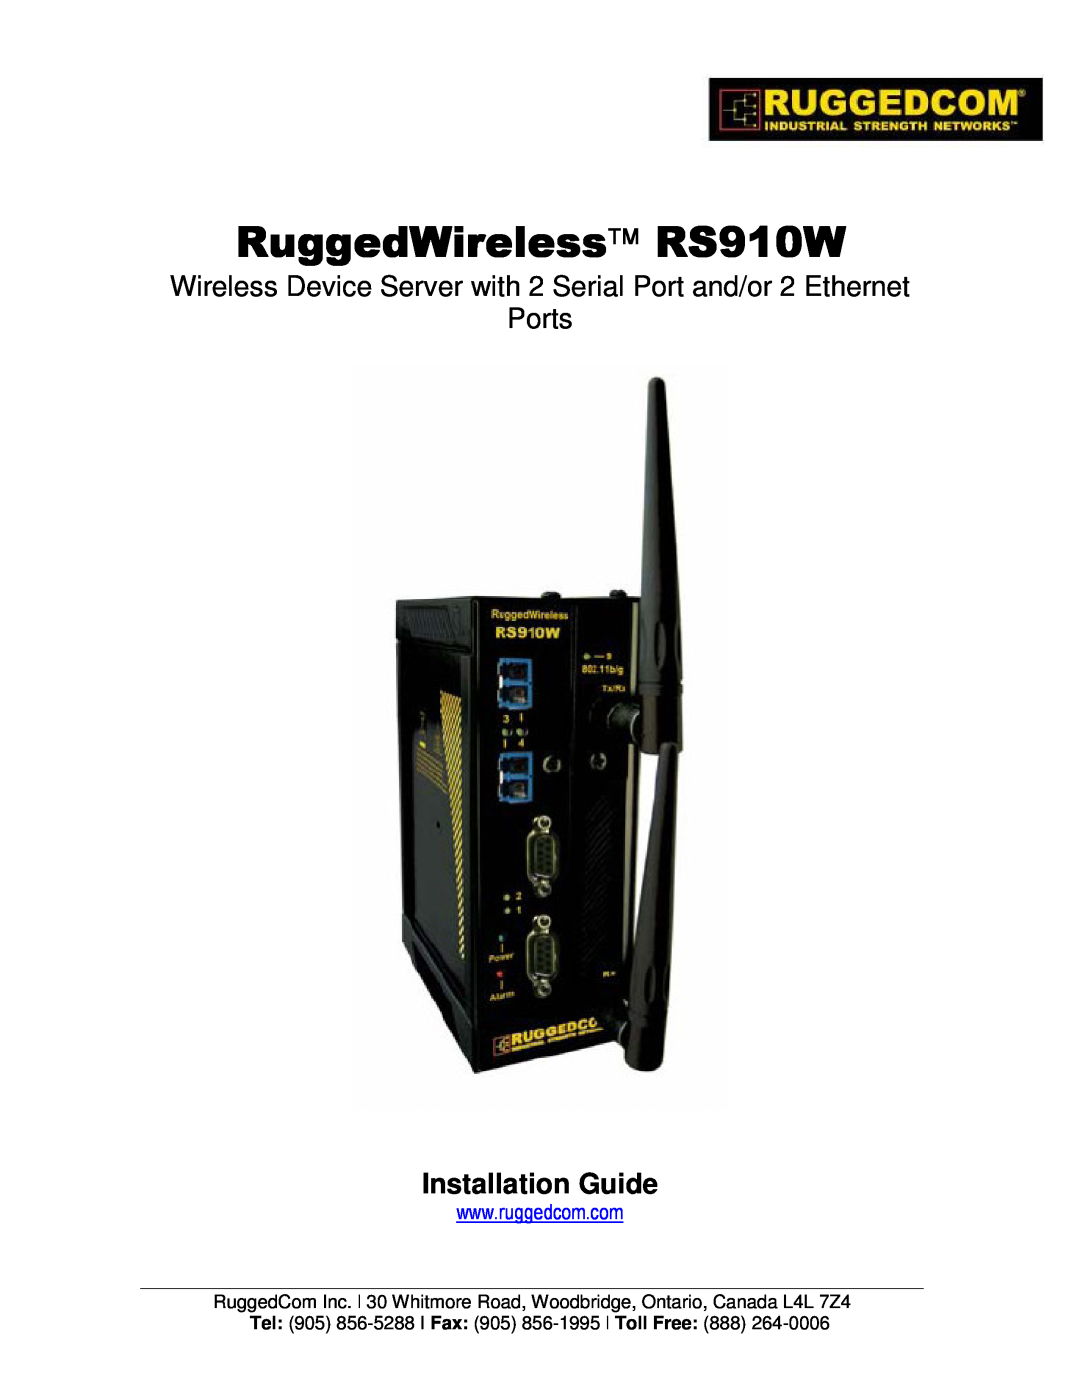 RuggedCom manual Installation Guide, RuggedWireless RS910W 